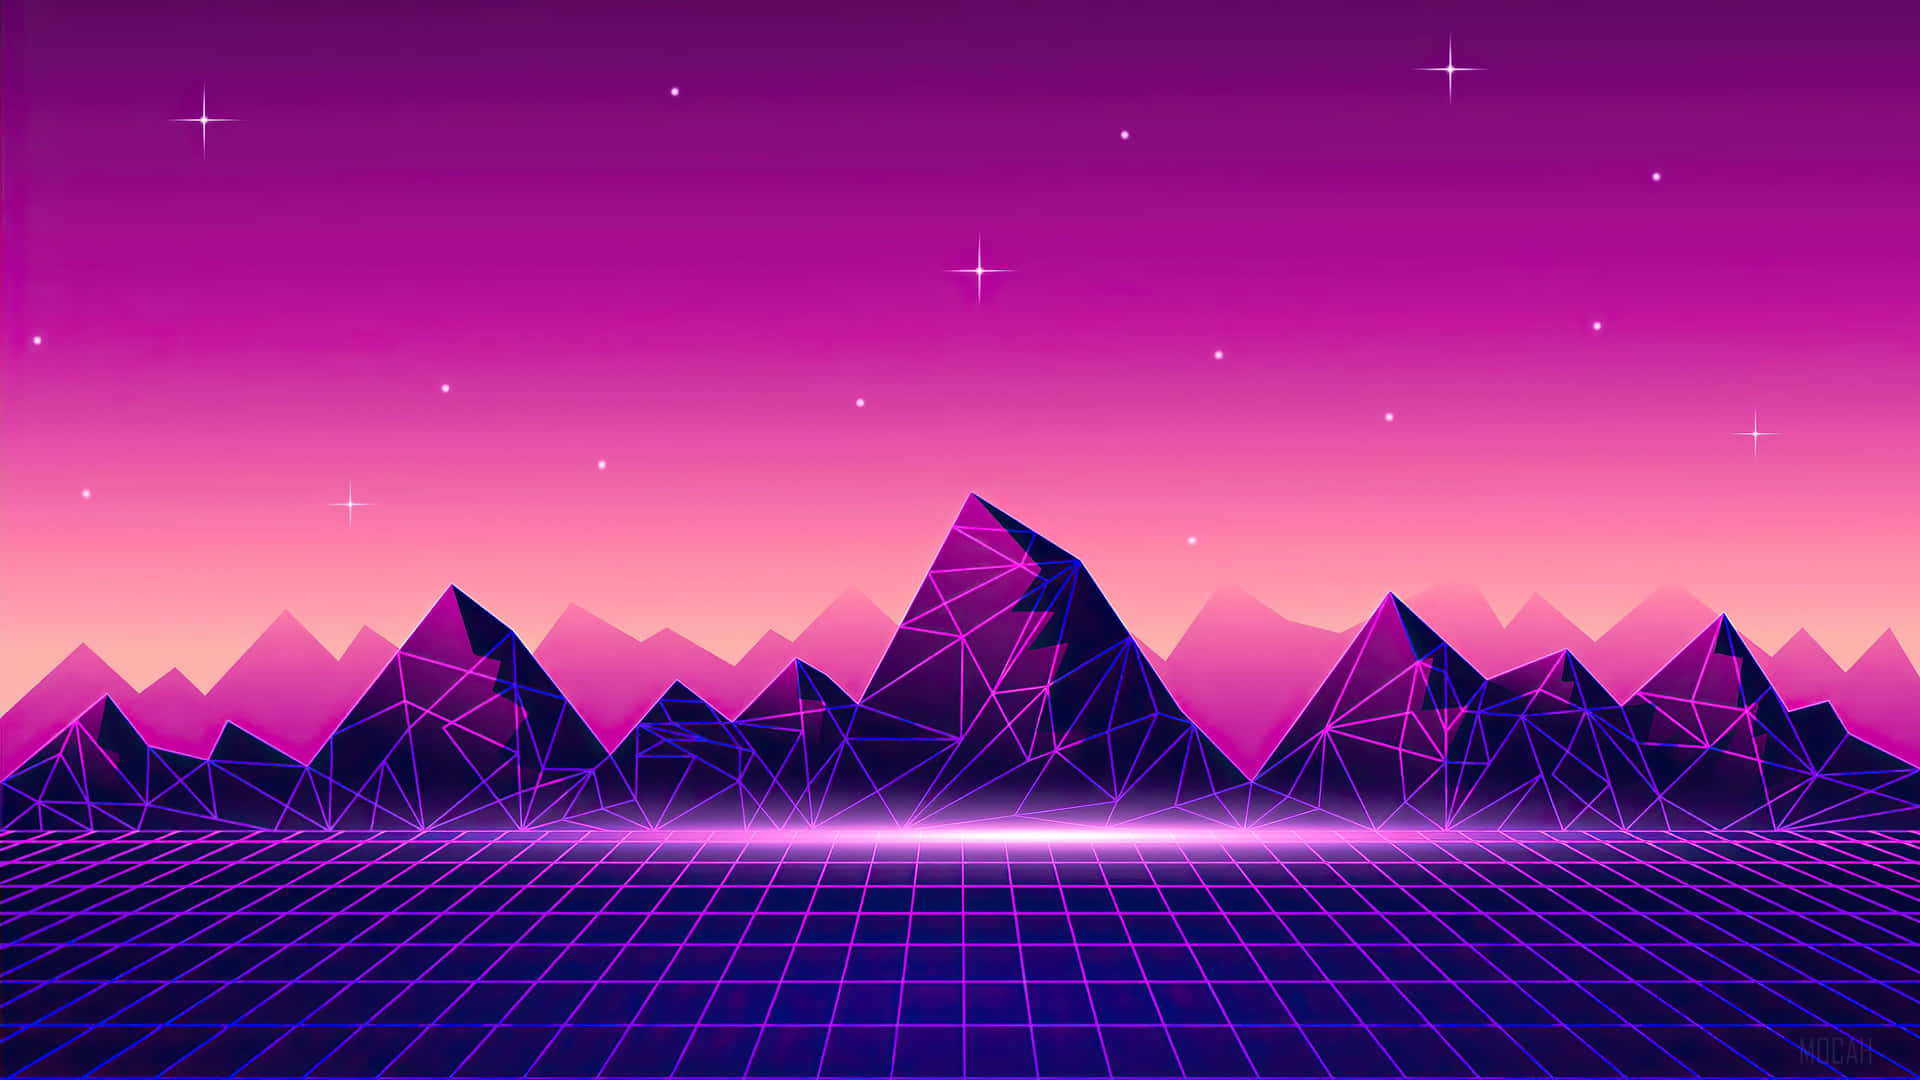 Pink And Purple Mountains Vaporwave Digital Art Background